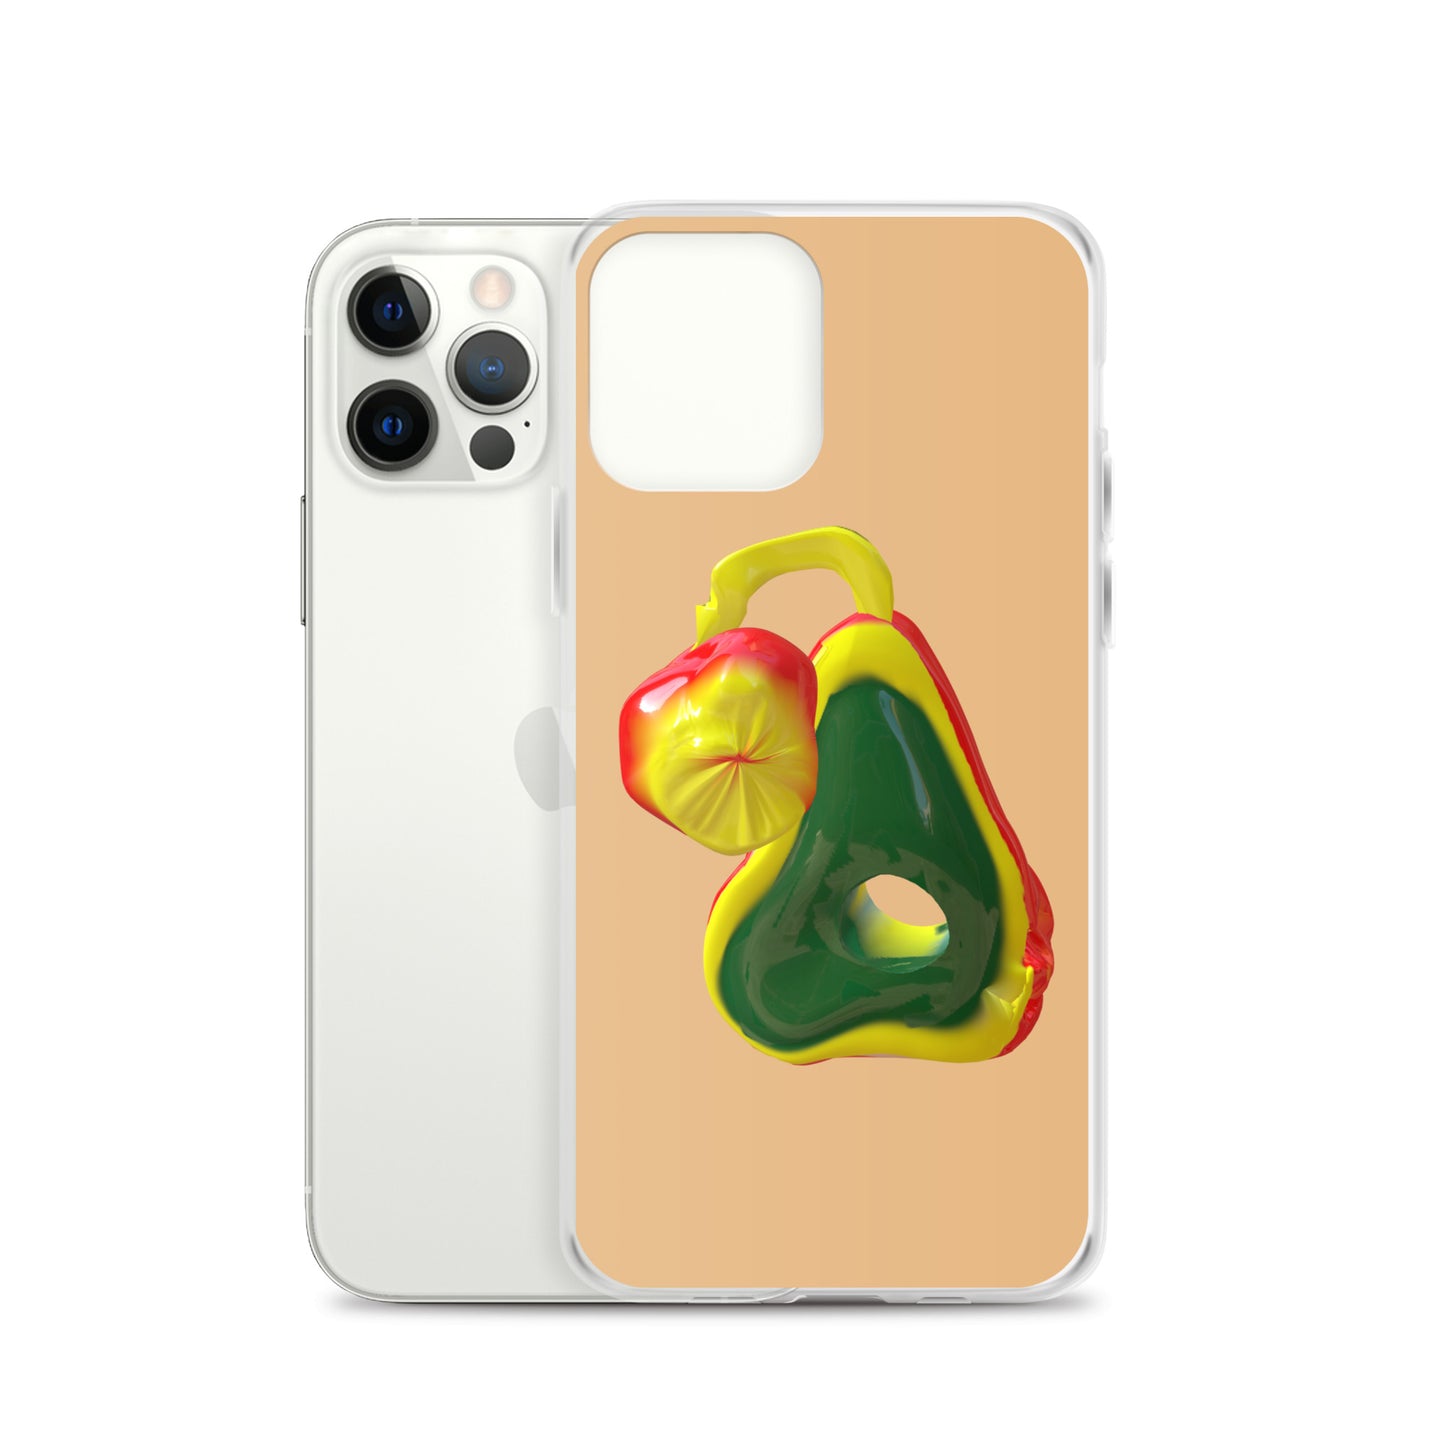 iPhone Case - Pear apple